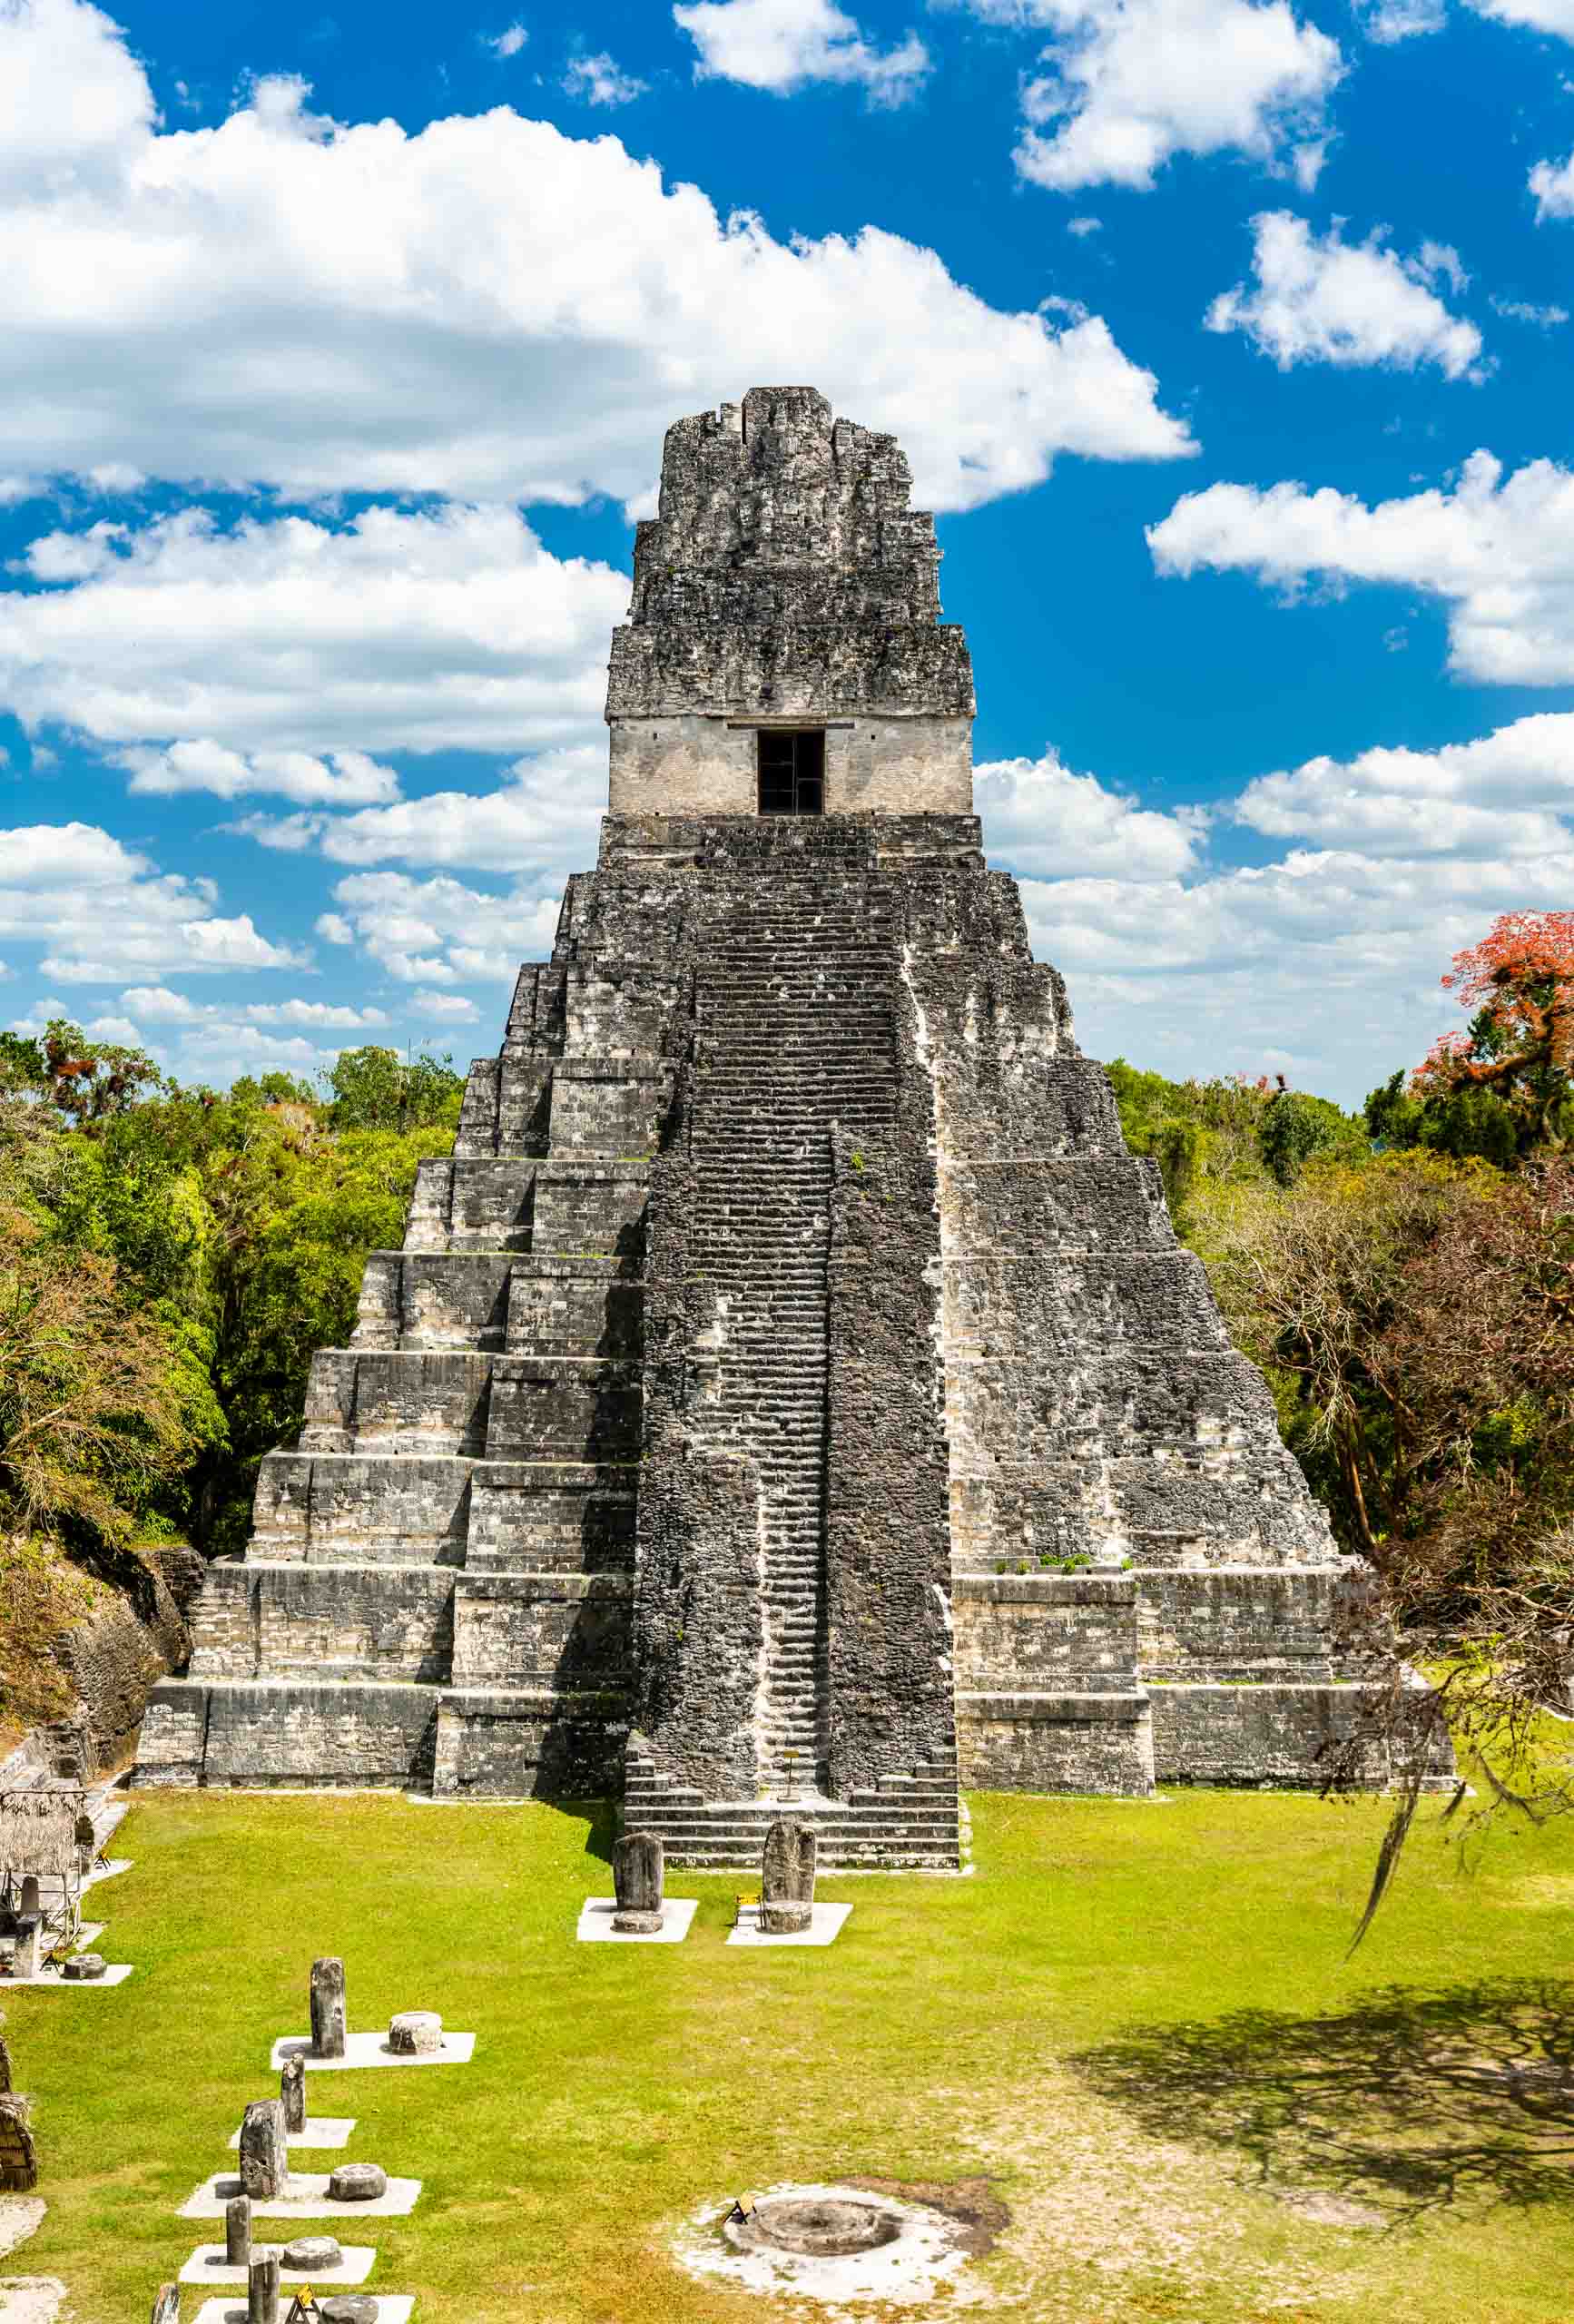 Temple of the Great Jaguar at Tikal.